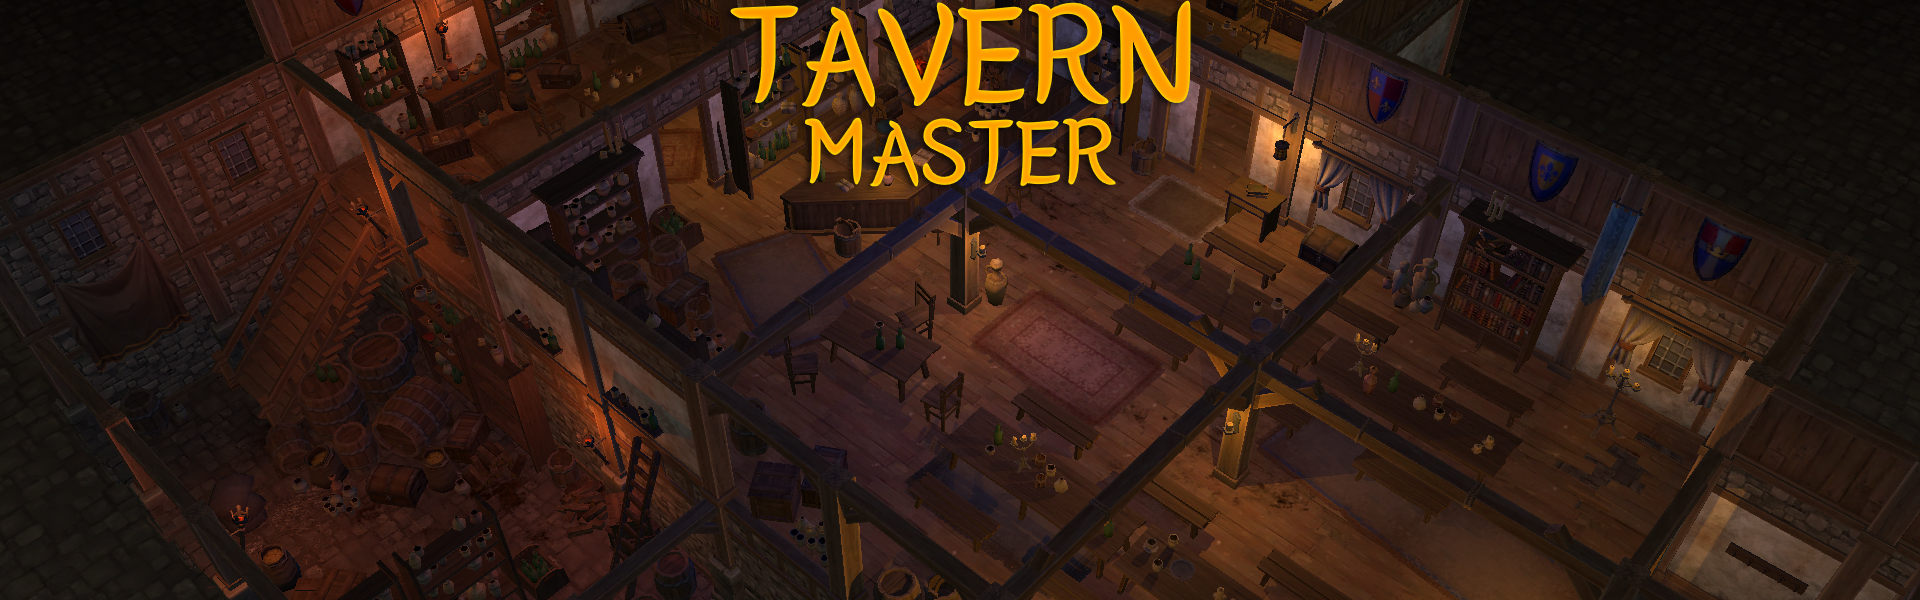 tavern master release date